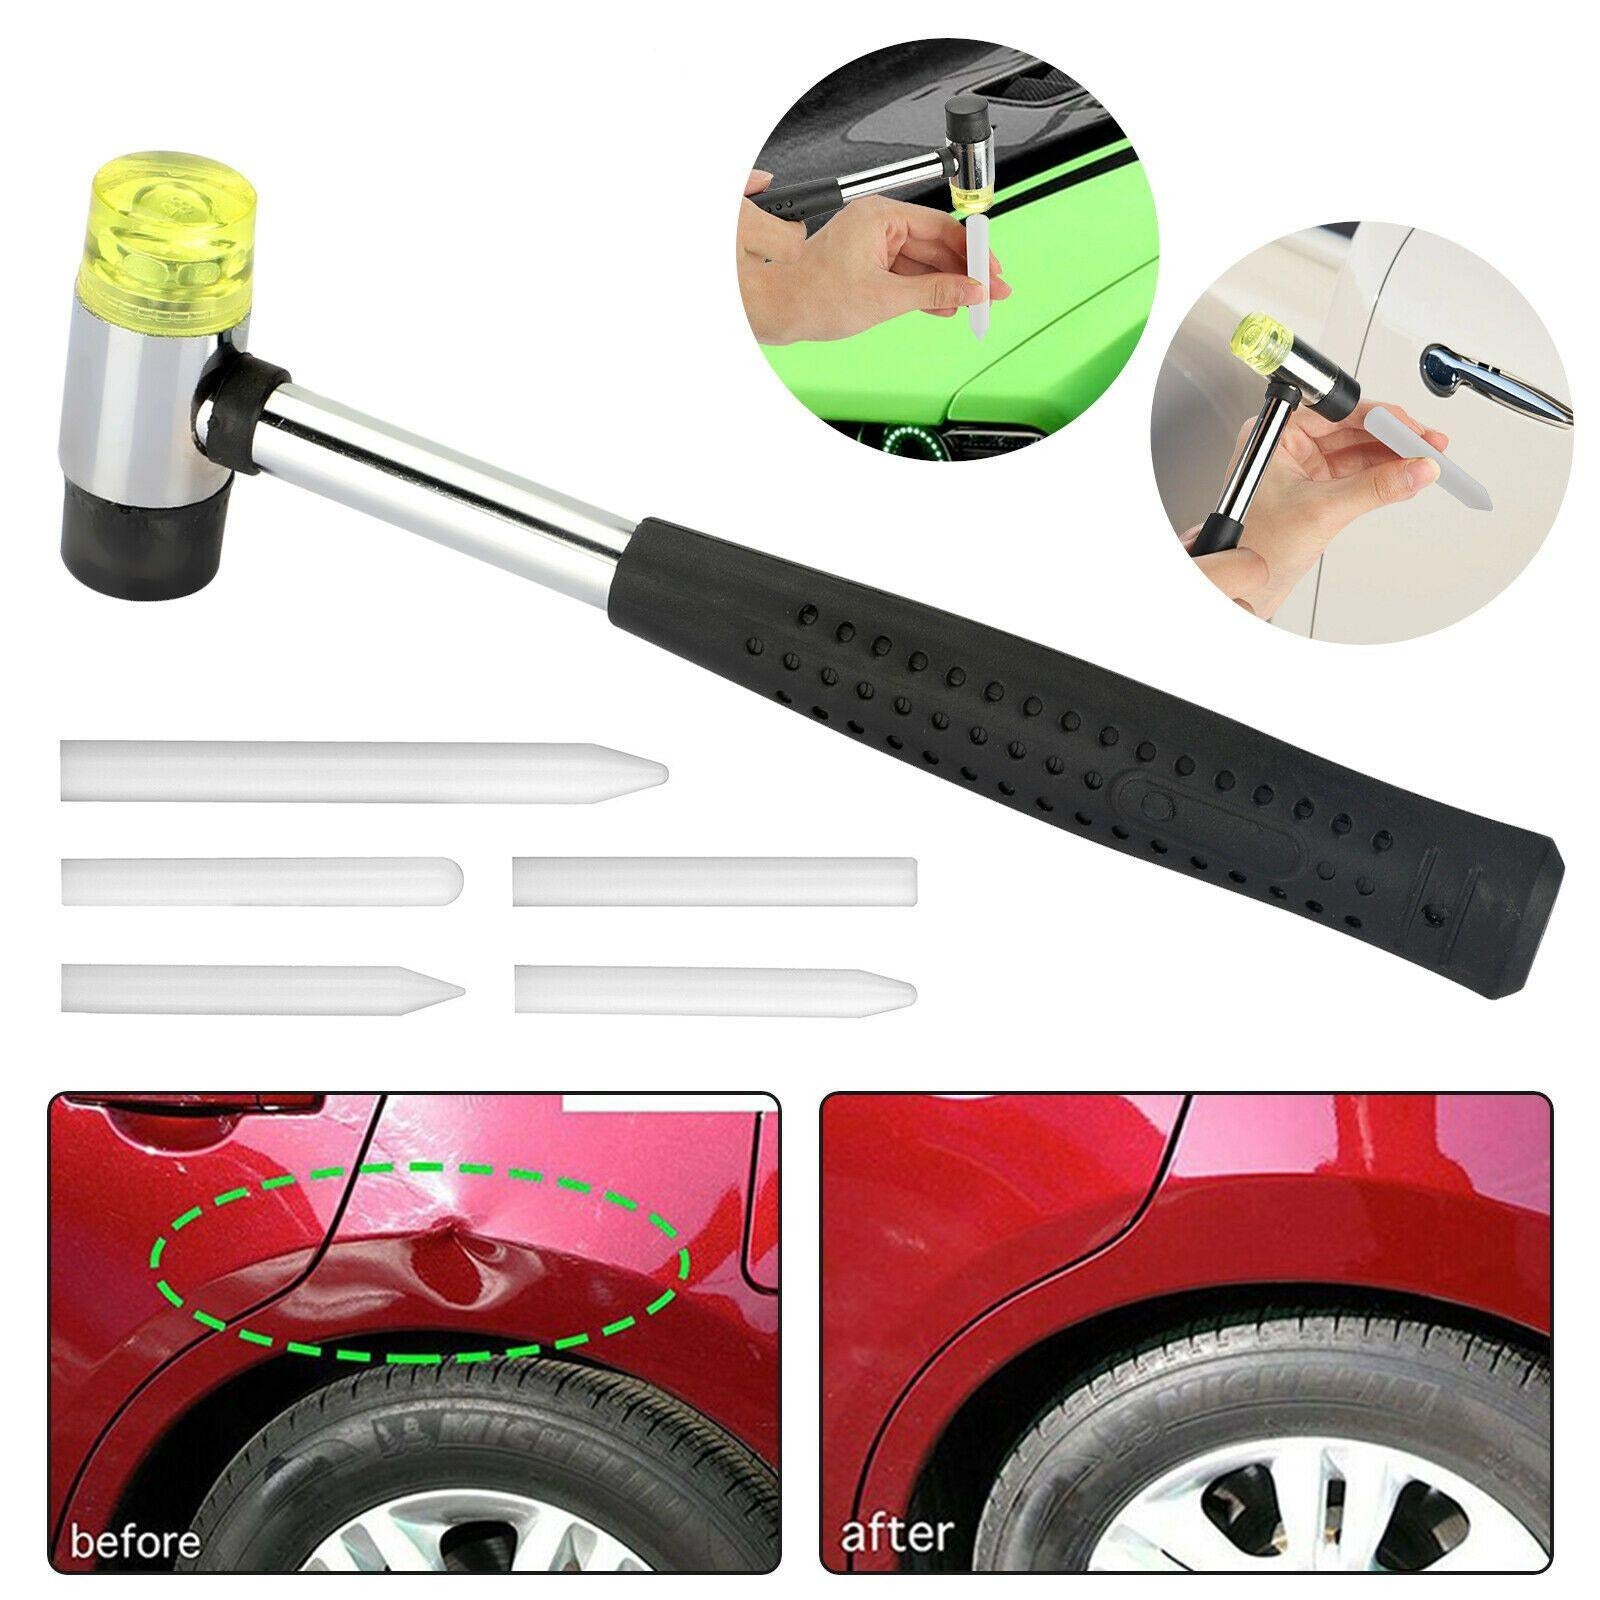 6pcs Paintless Car Hail Damage Remover Repair Kit Auto Dent Puller Hammer Tool - KinglyDay